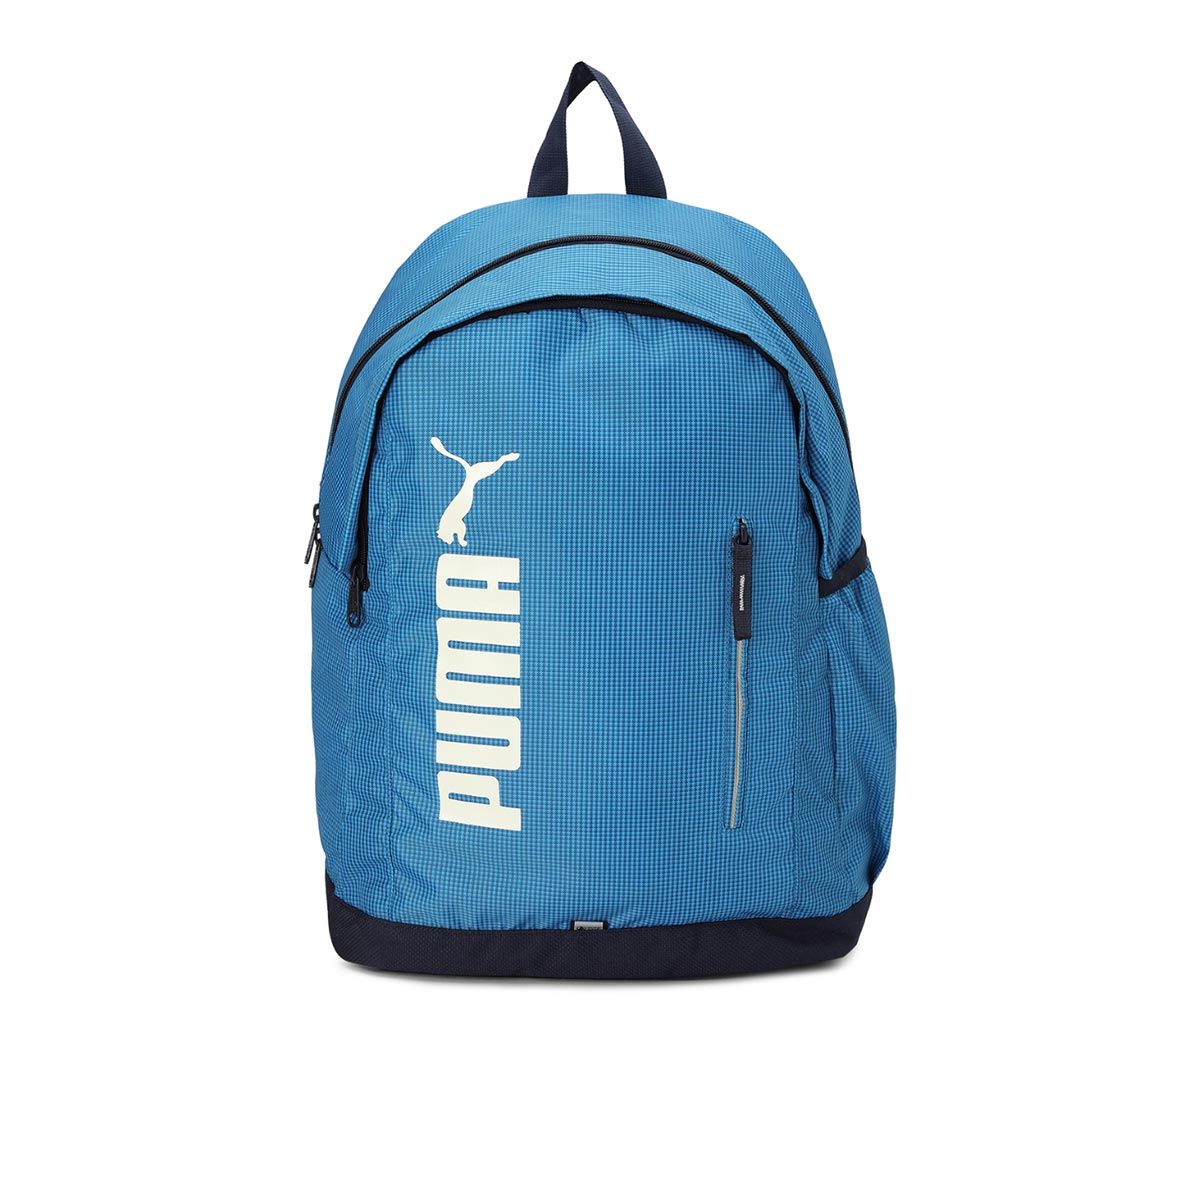 Puma School Blue Backpack V2: Buy Puma School Blue Backpack V2 Online ...